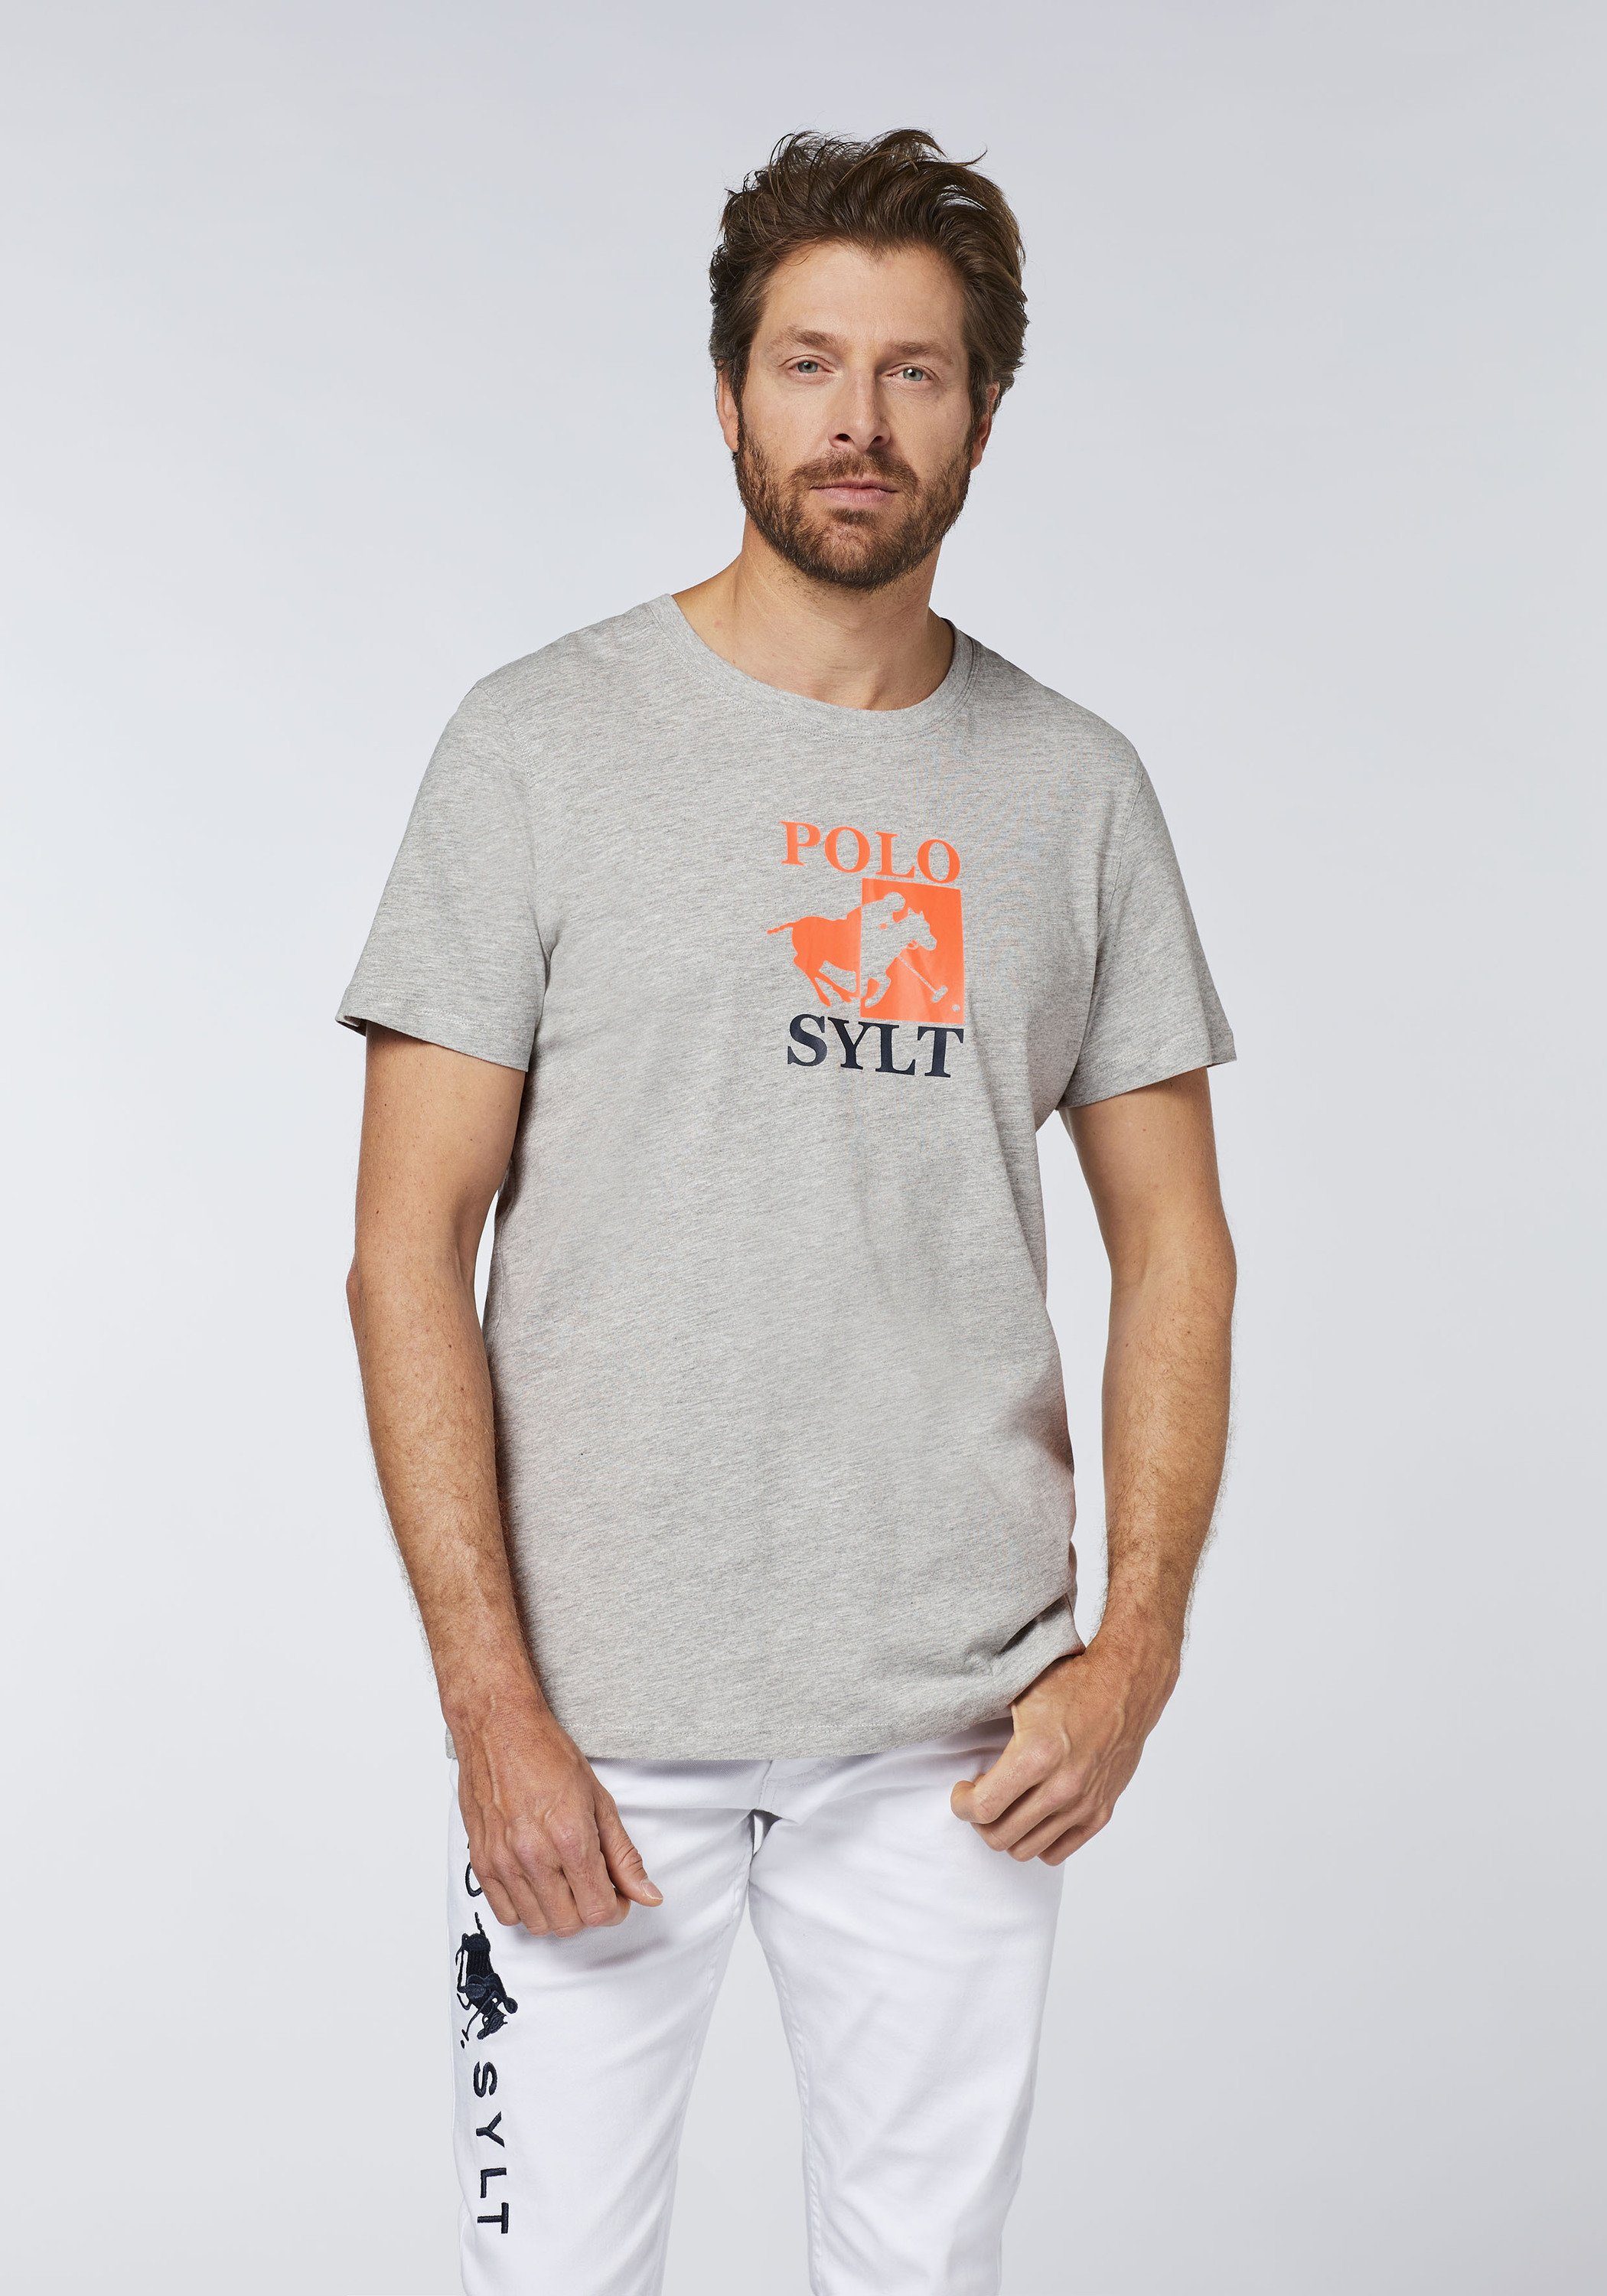 Polo Sylt Print-Shirt Melange mit Neutral großem Gray 17-4402M Logoprint